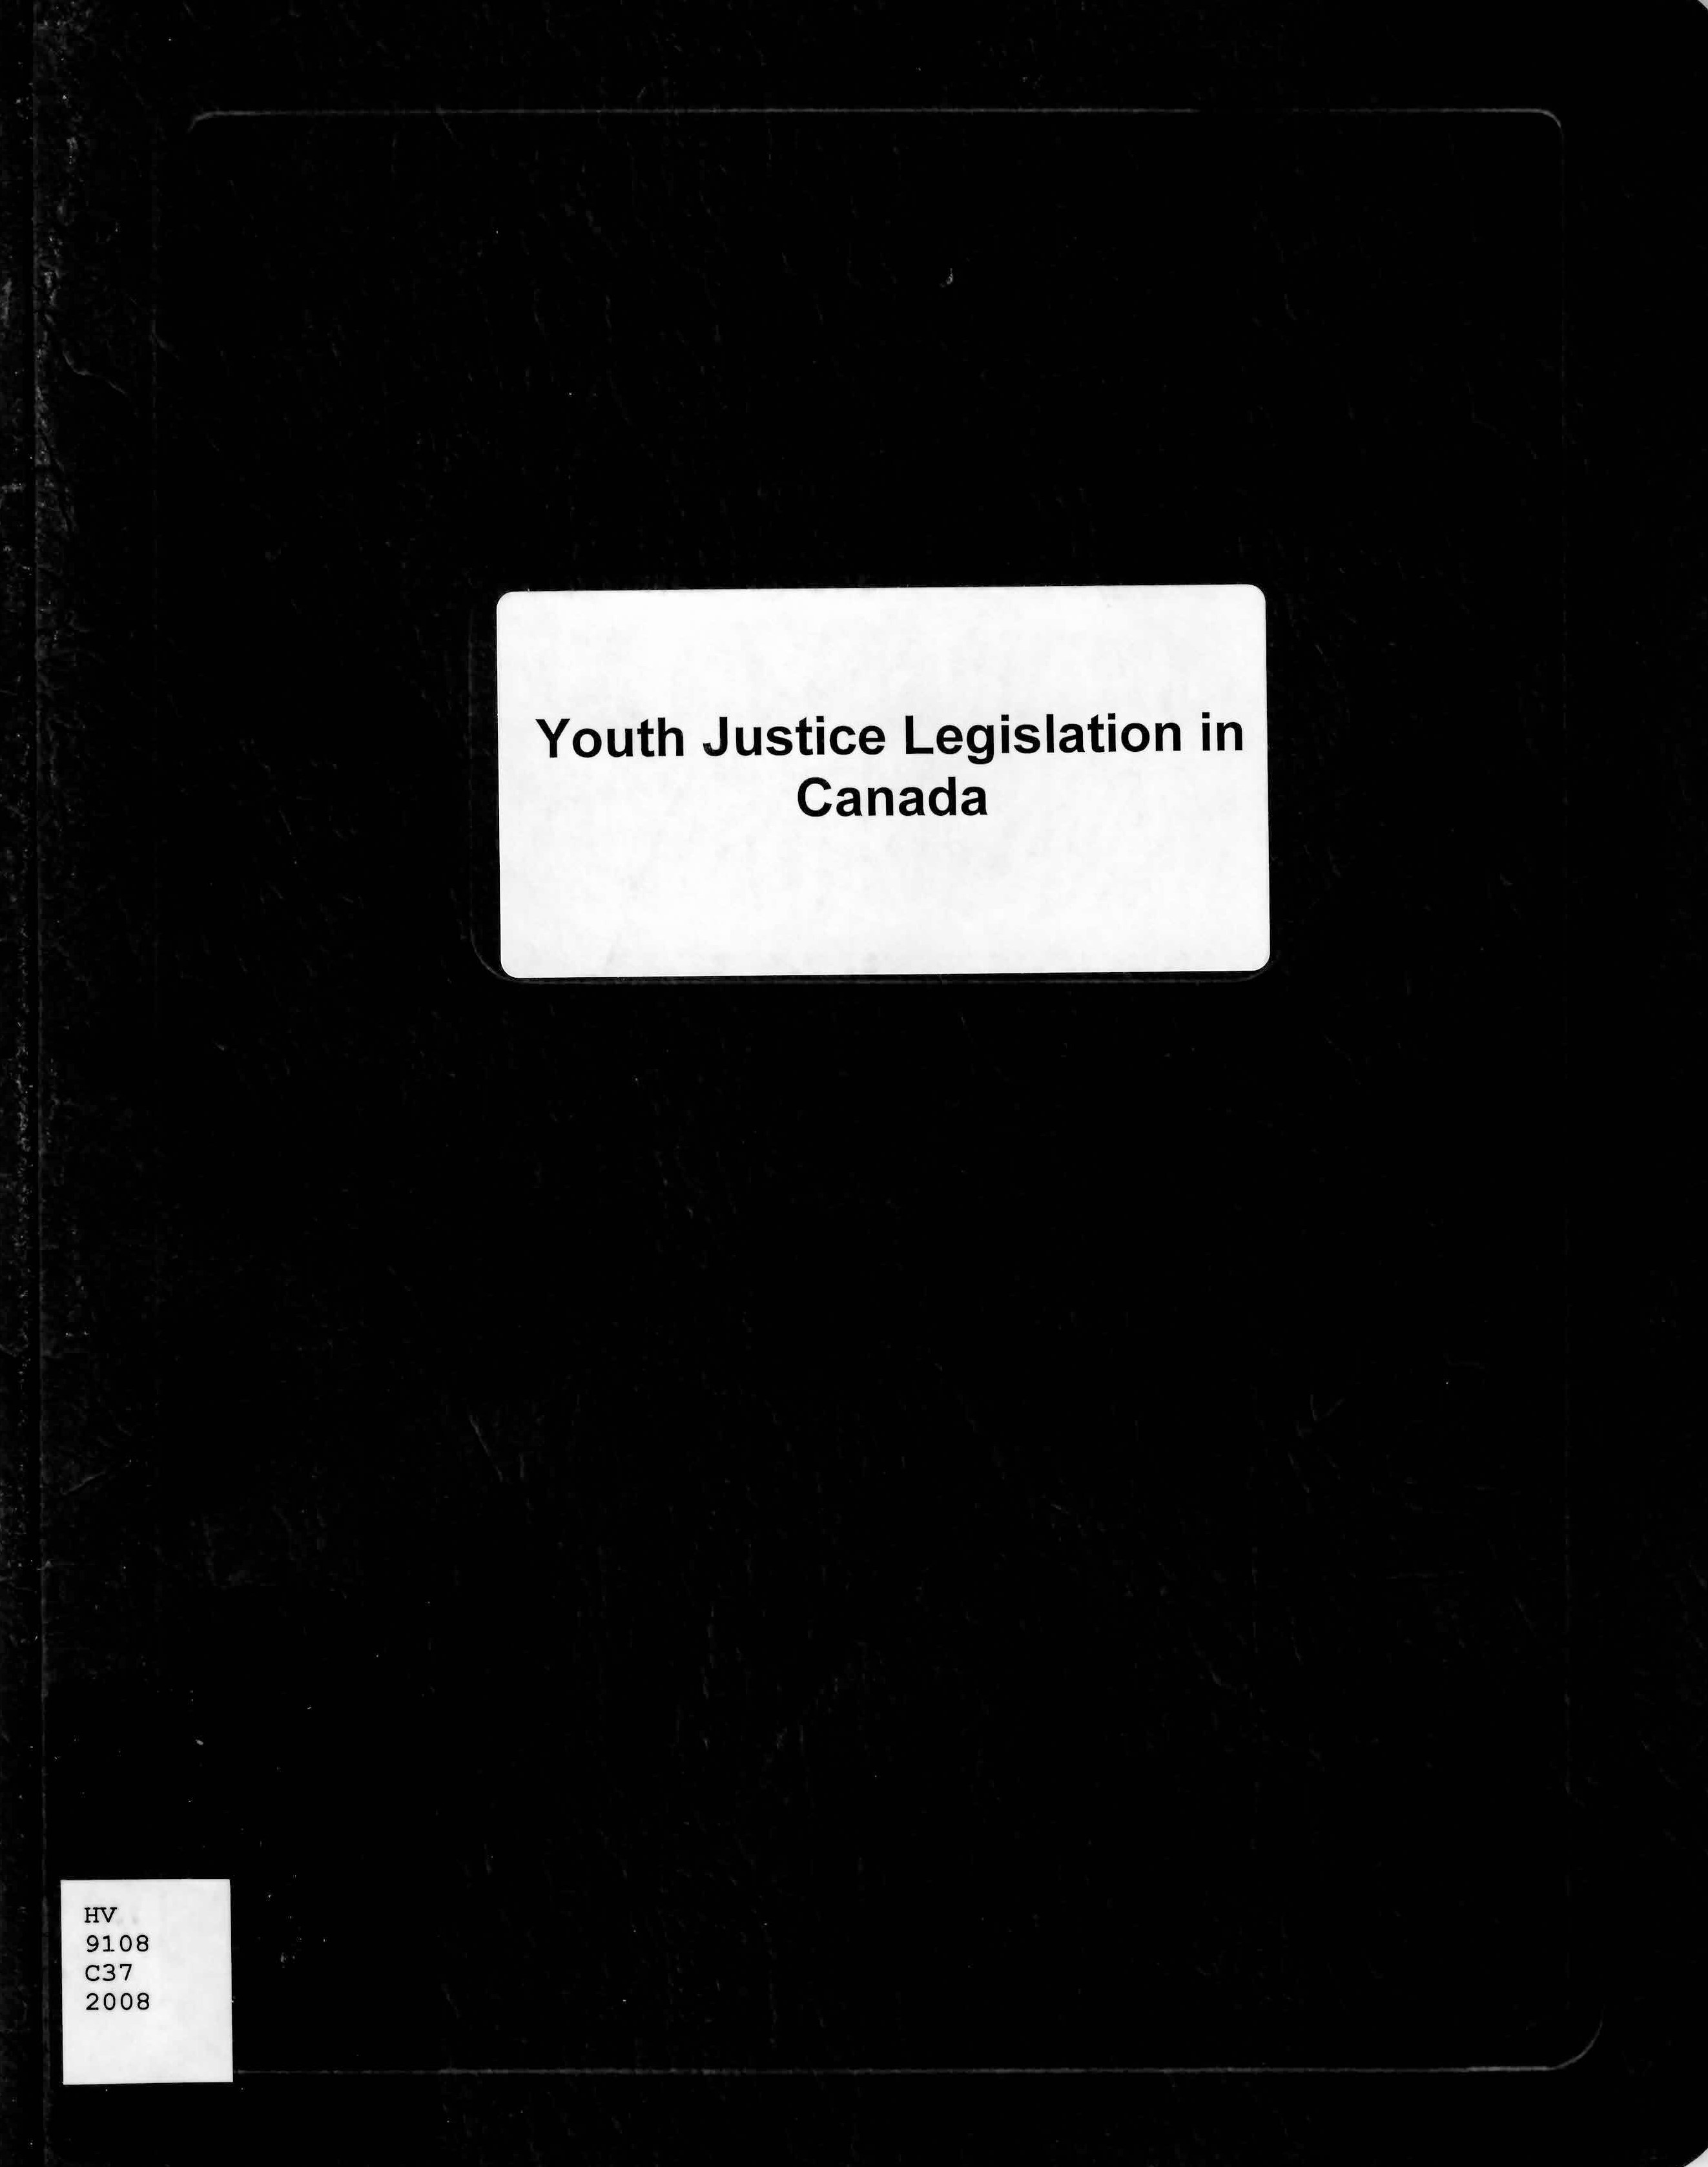 Youth justice legislation in Canada